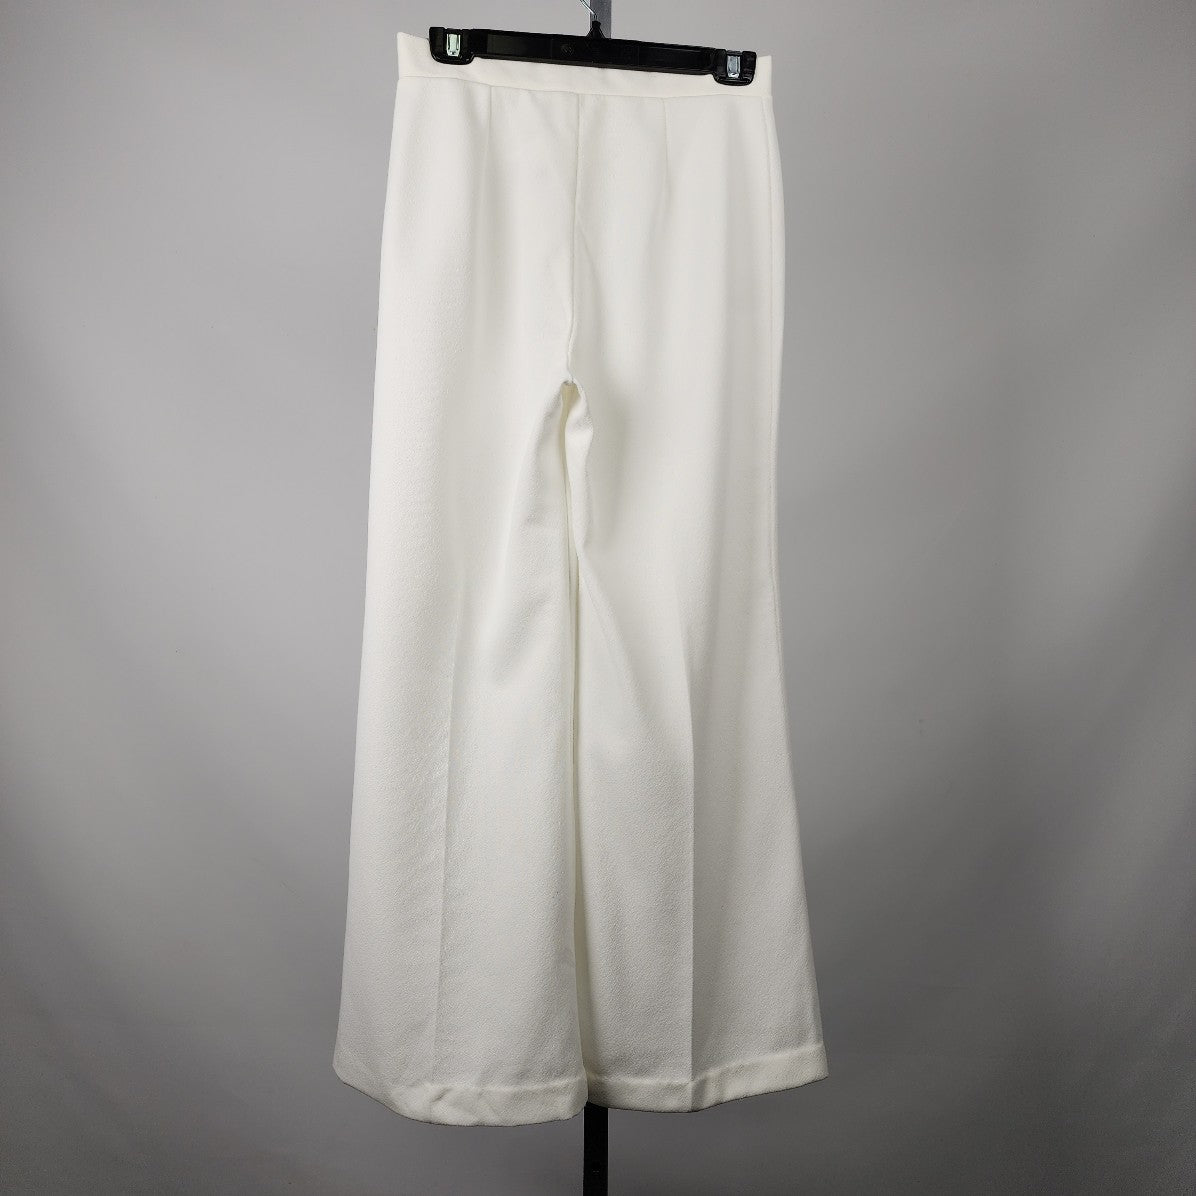 Vintage White Belle Bottom Pants Size S